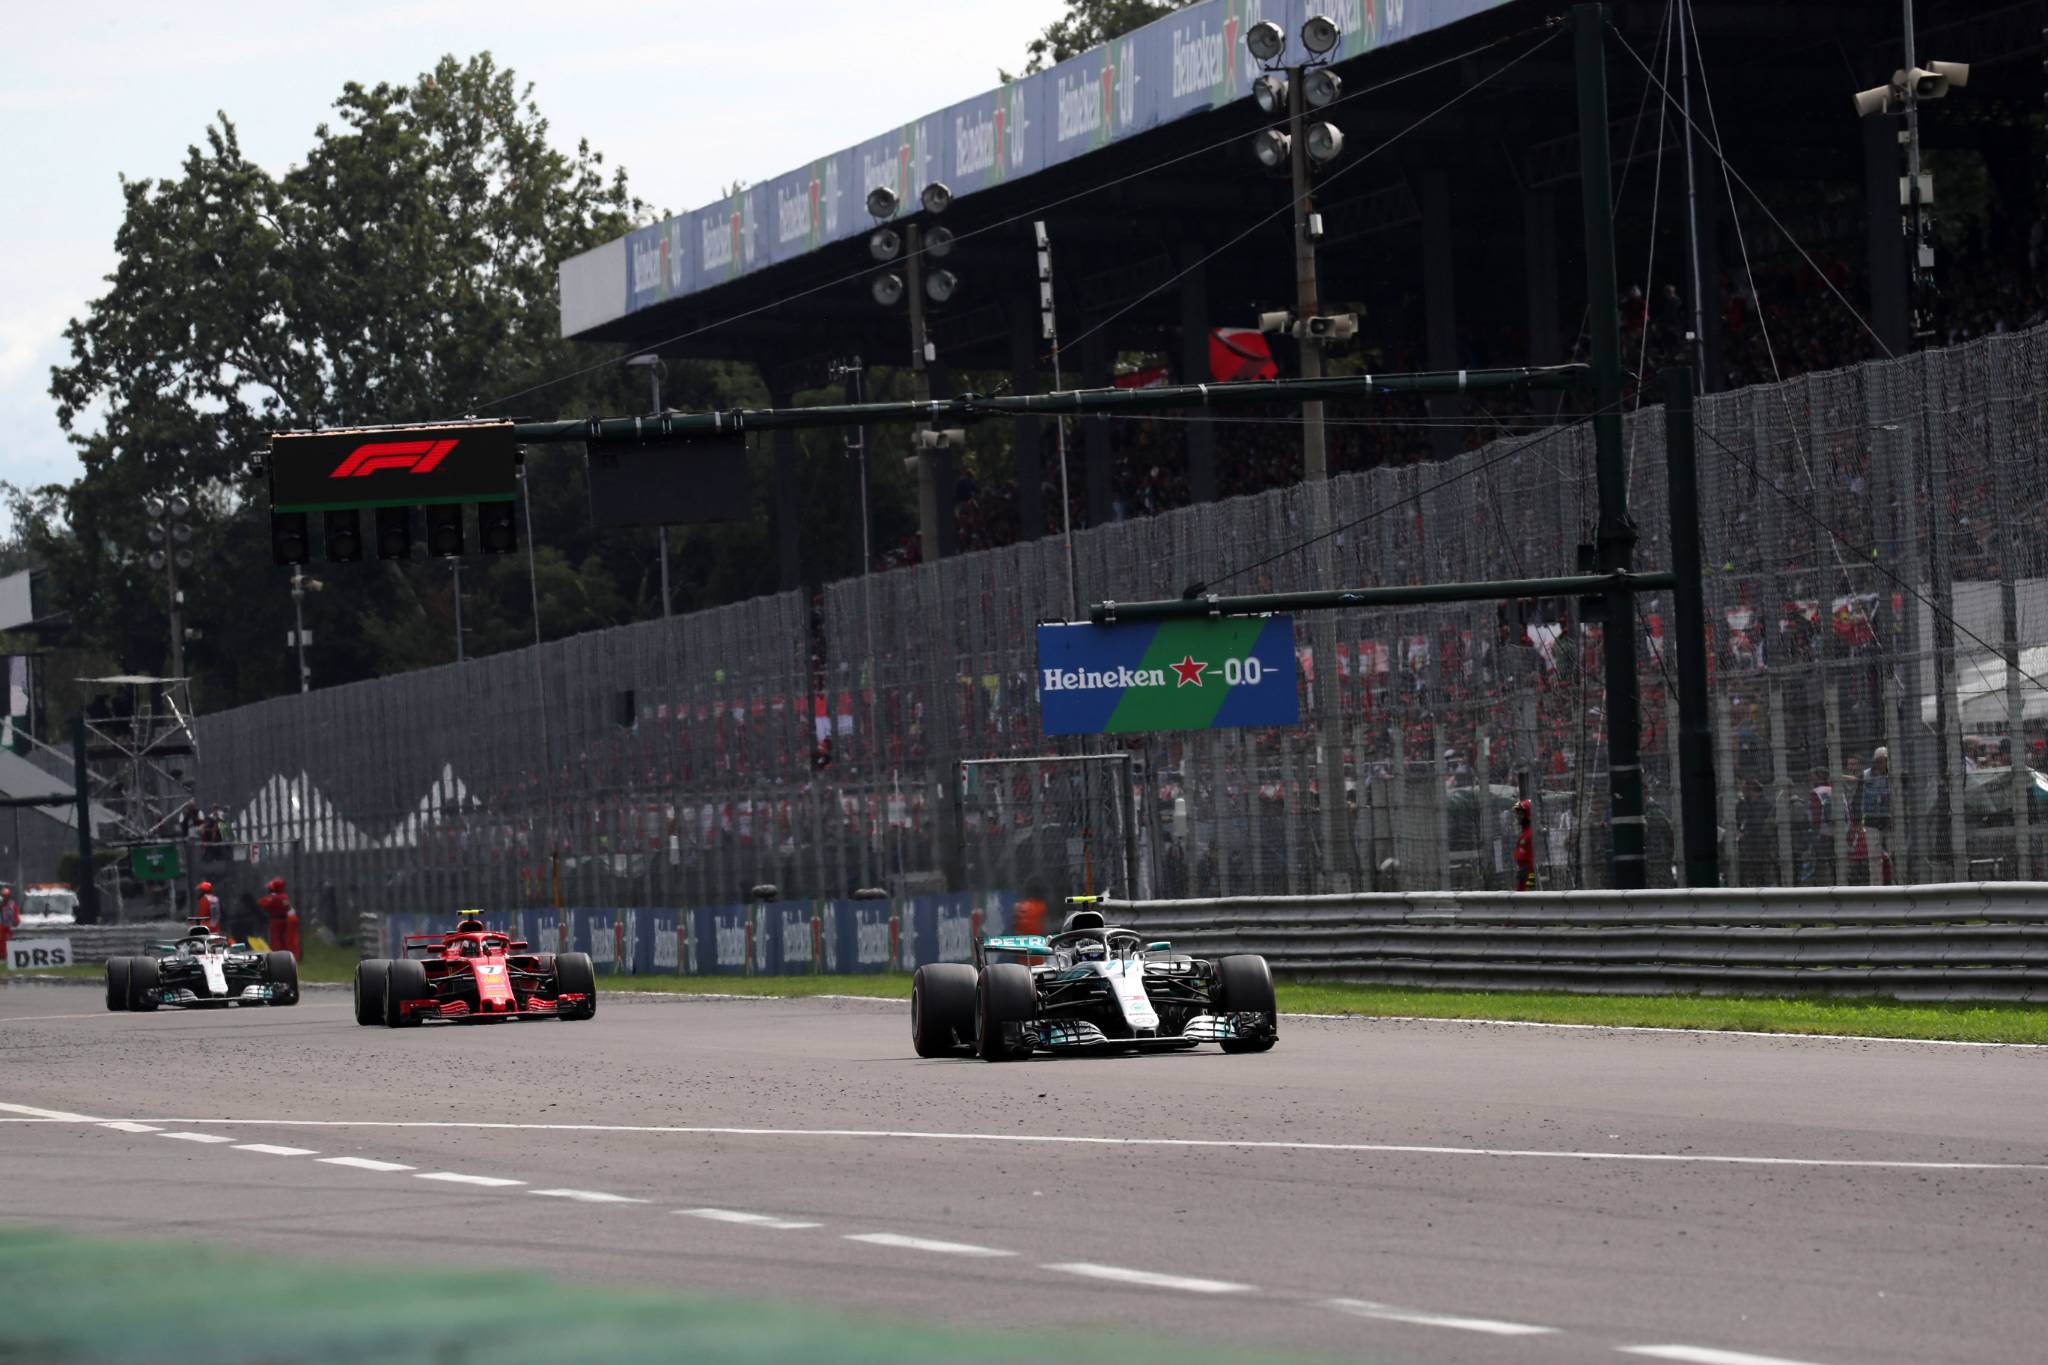 02.09.2018 - Race, Valtteri Bottas (FIN) Mercedes AMG F1 W09 leads Kimi Raikkonen (FIN) Scuderia Ferrari SF71H 